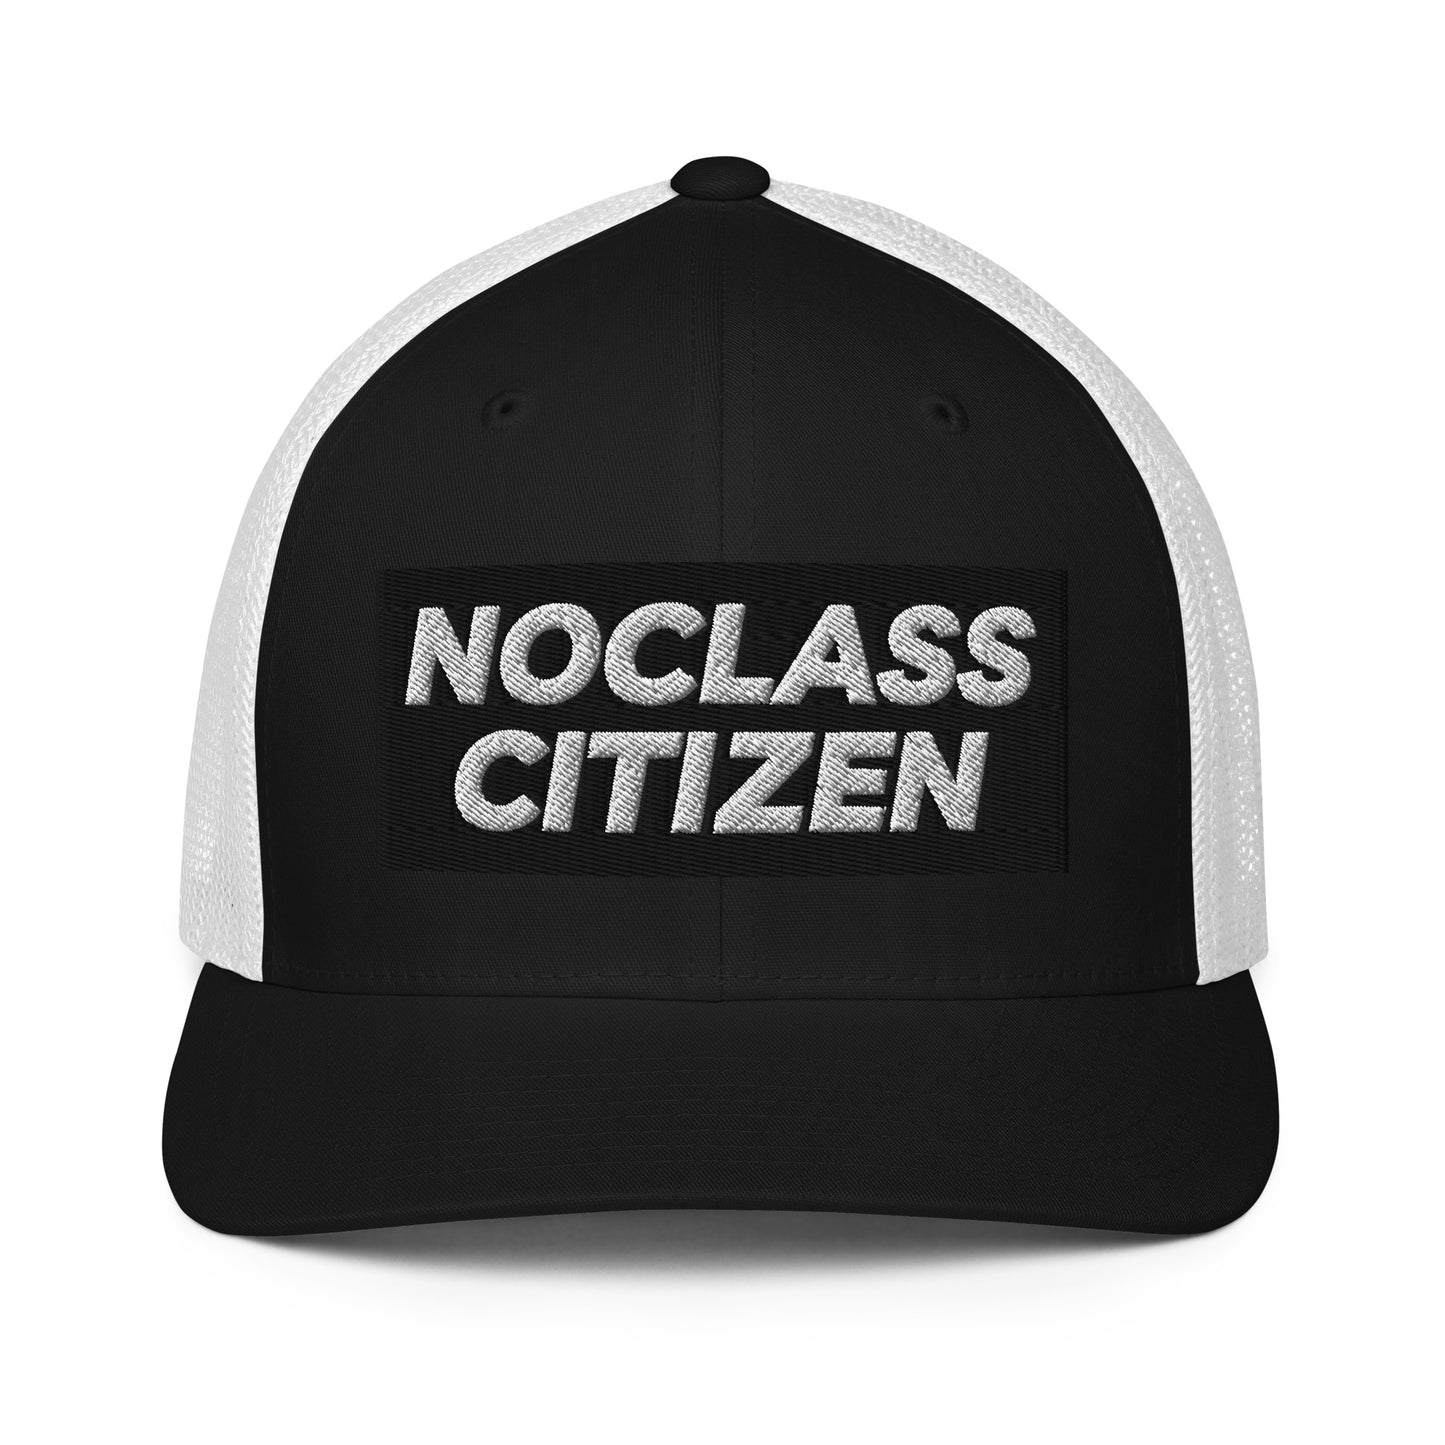 NOCLASS CITIZEN Text - Closed-Back Trucker Cap